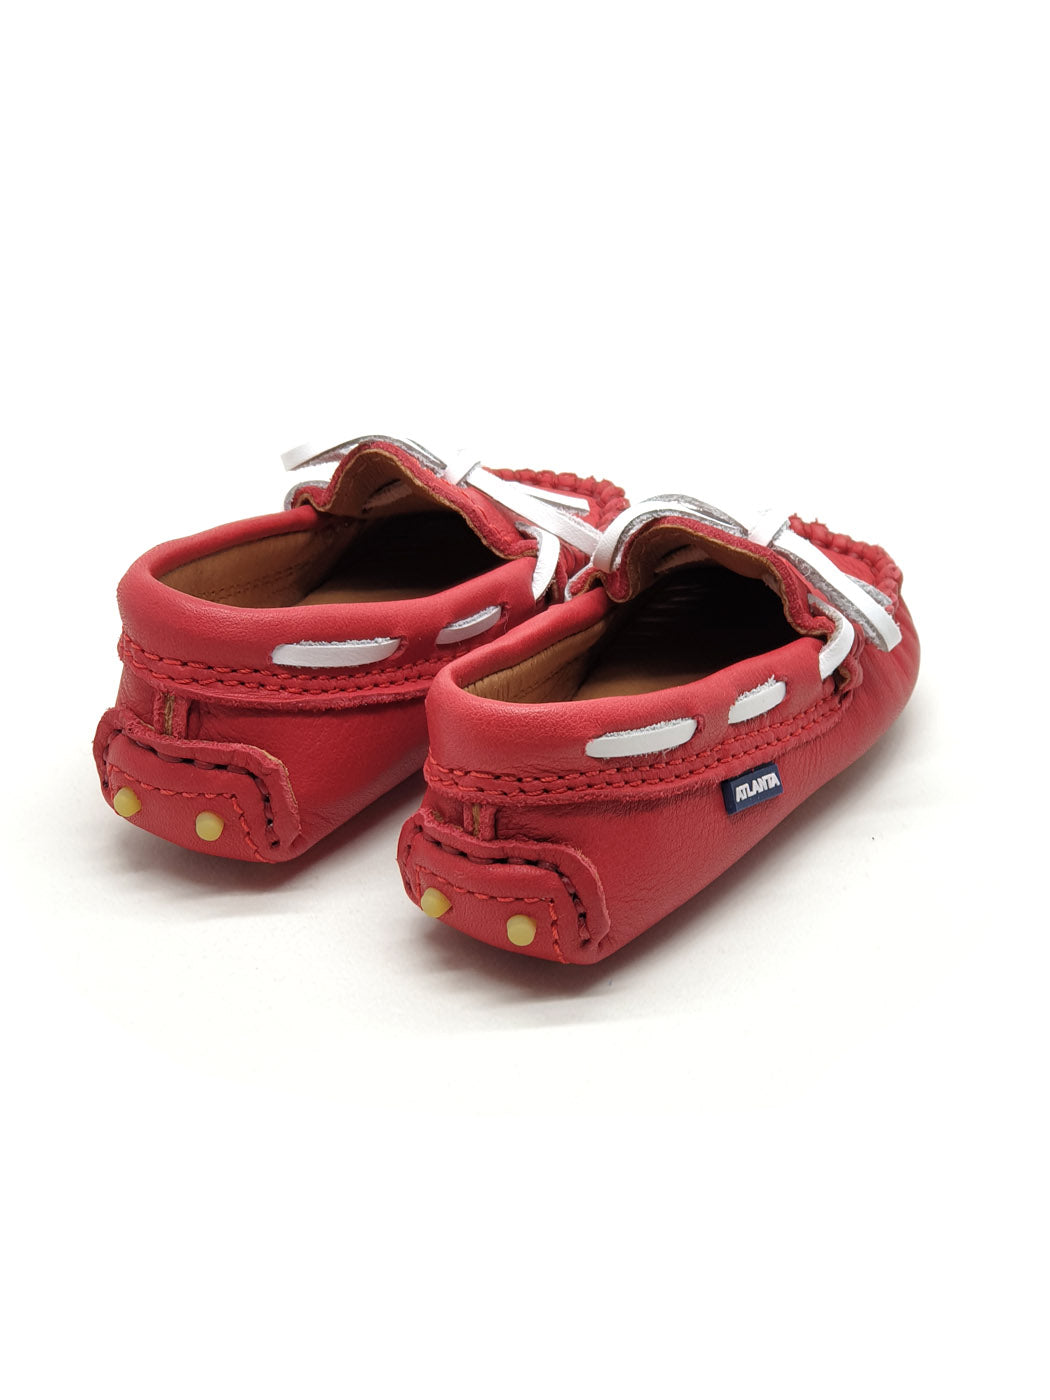 Atlanta Mocassin- Baby Shoes Moccasins Red-001B003